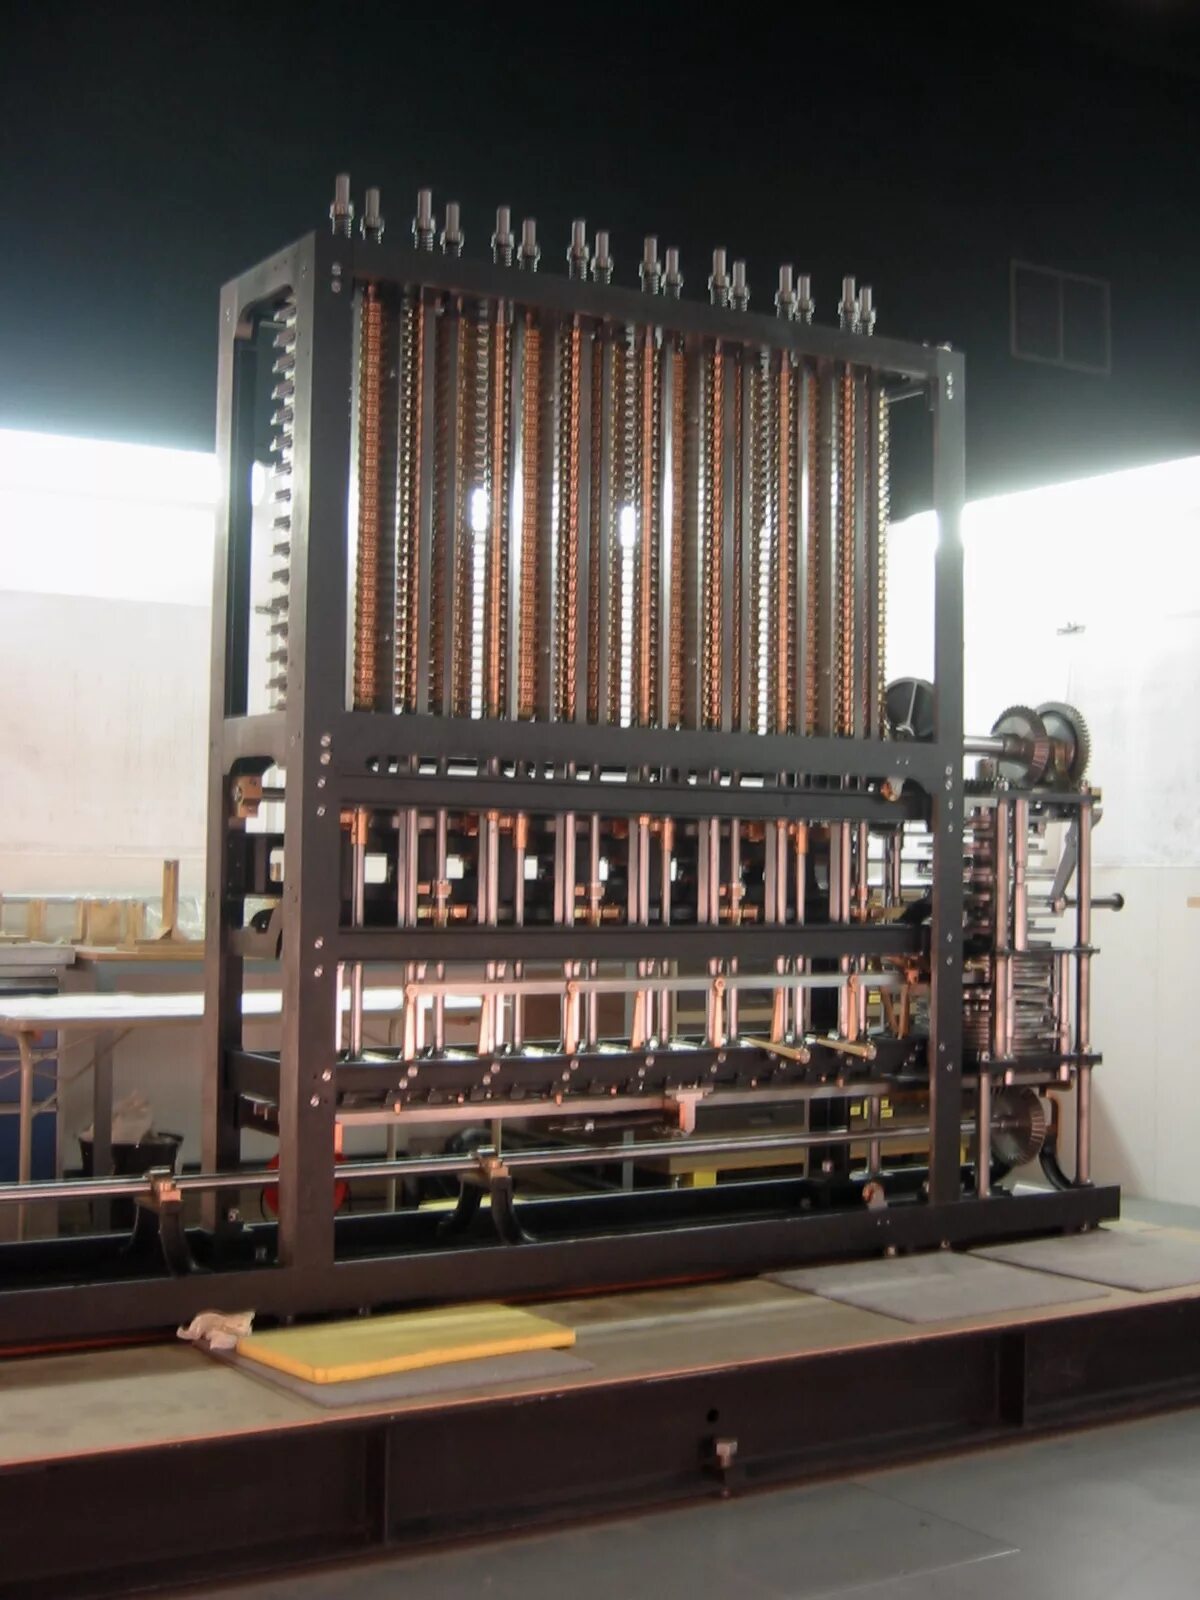 Разностная машина Чарльза Бэббиджа. Разностная машина Чарльза Бэббиджа 1822. Первая вычислительная машина Чарльза Бэббиджа.